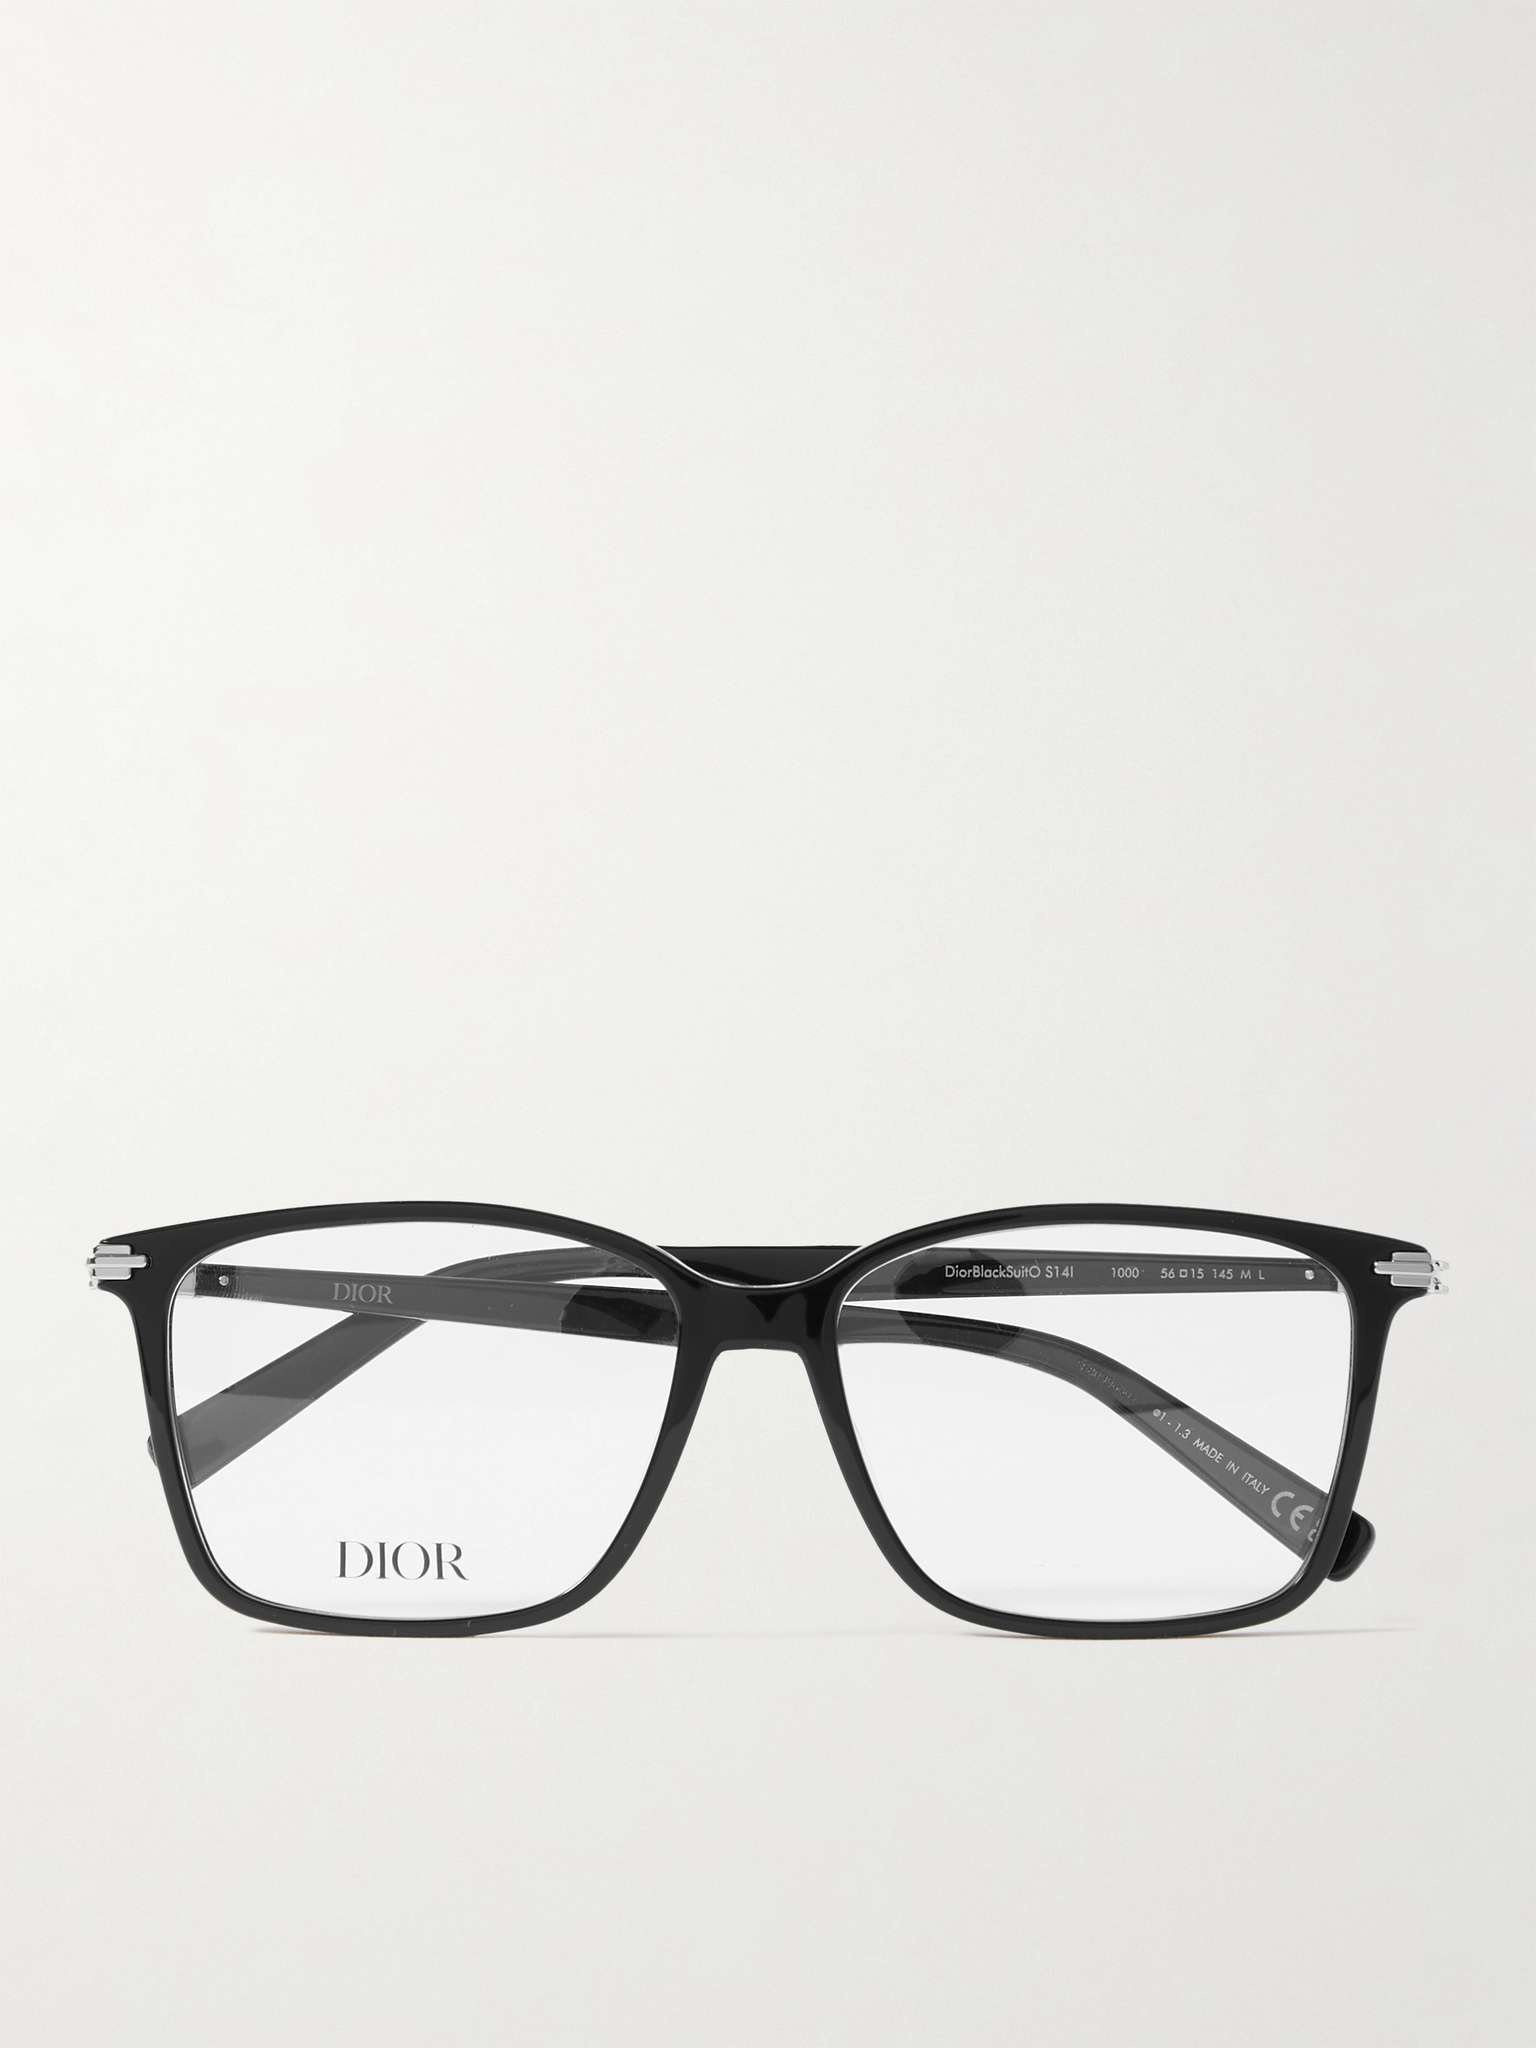 DiorBlackSuit S14l Square-Frame Acetate Optical Glasses - 1